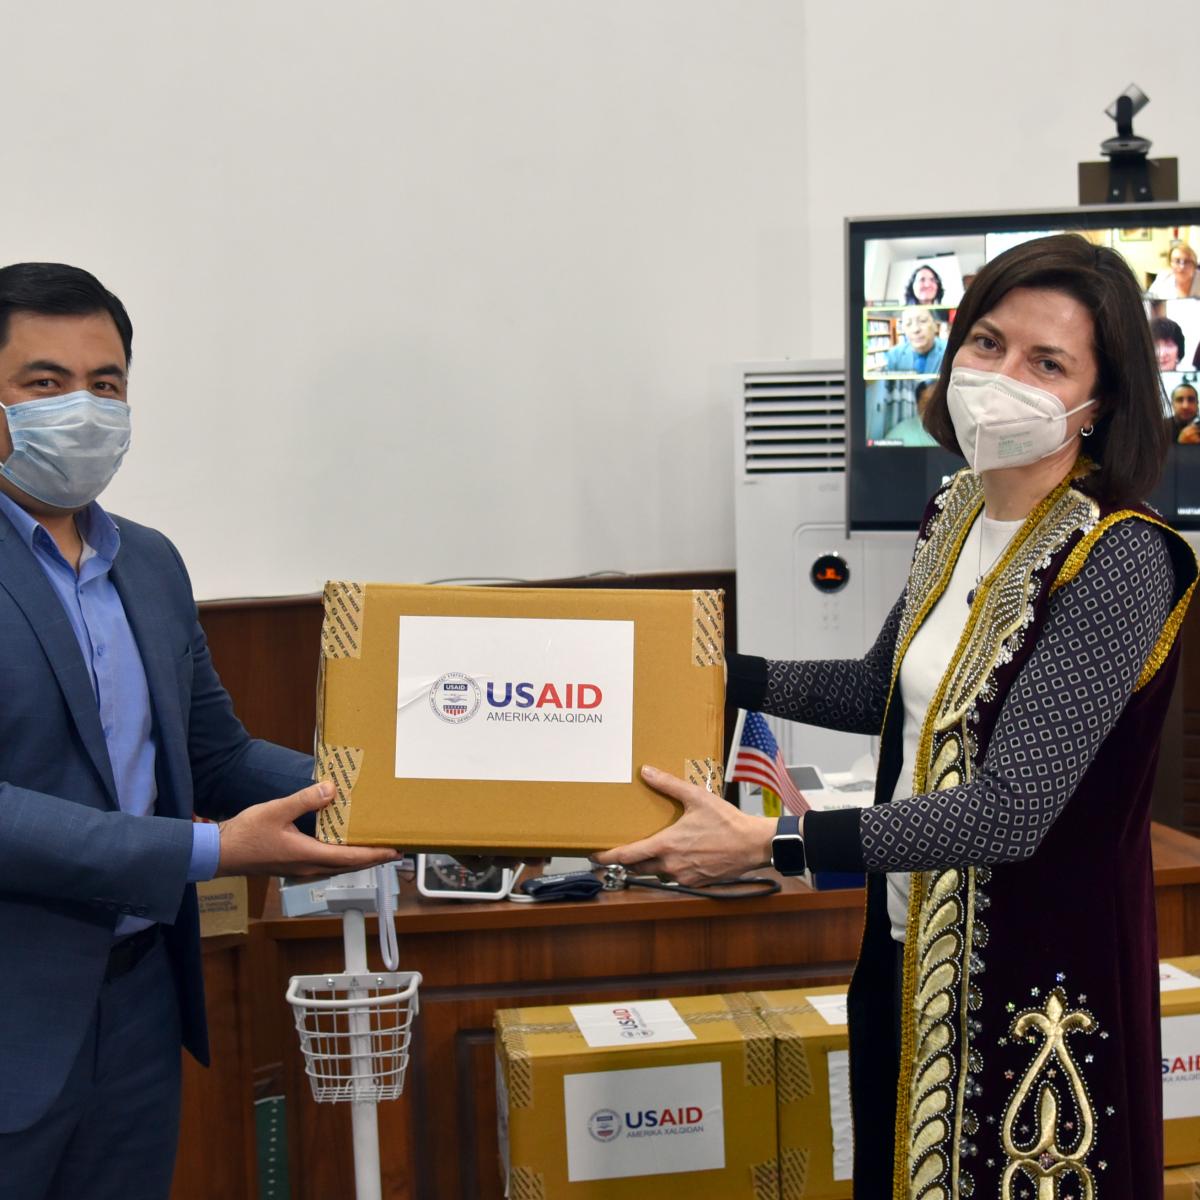 USAID provides medical equipment